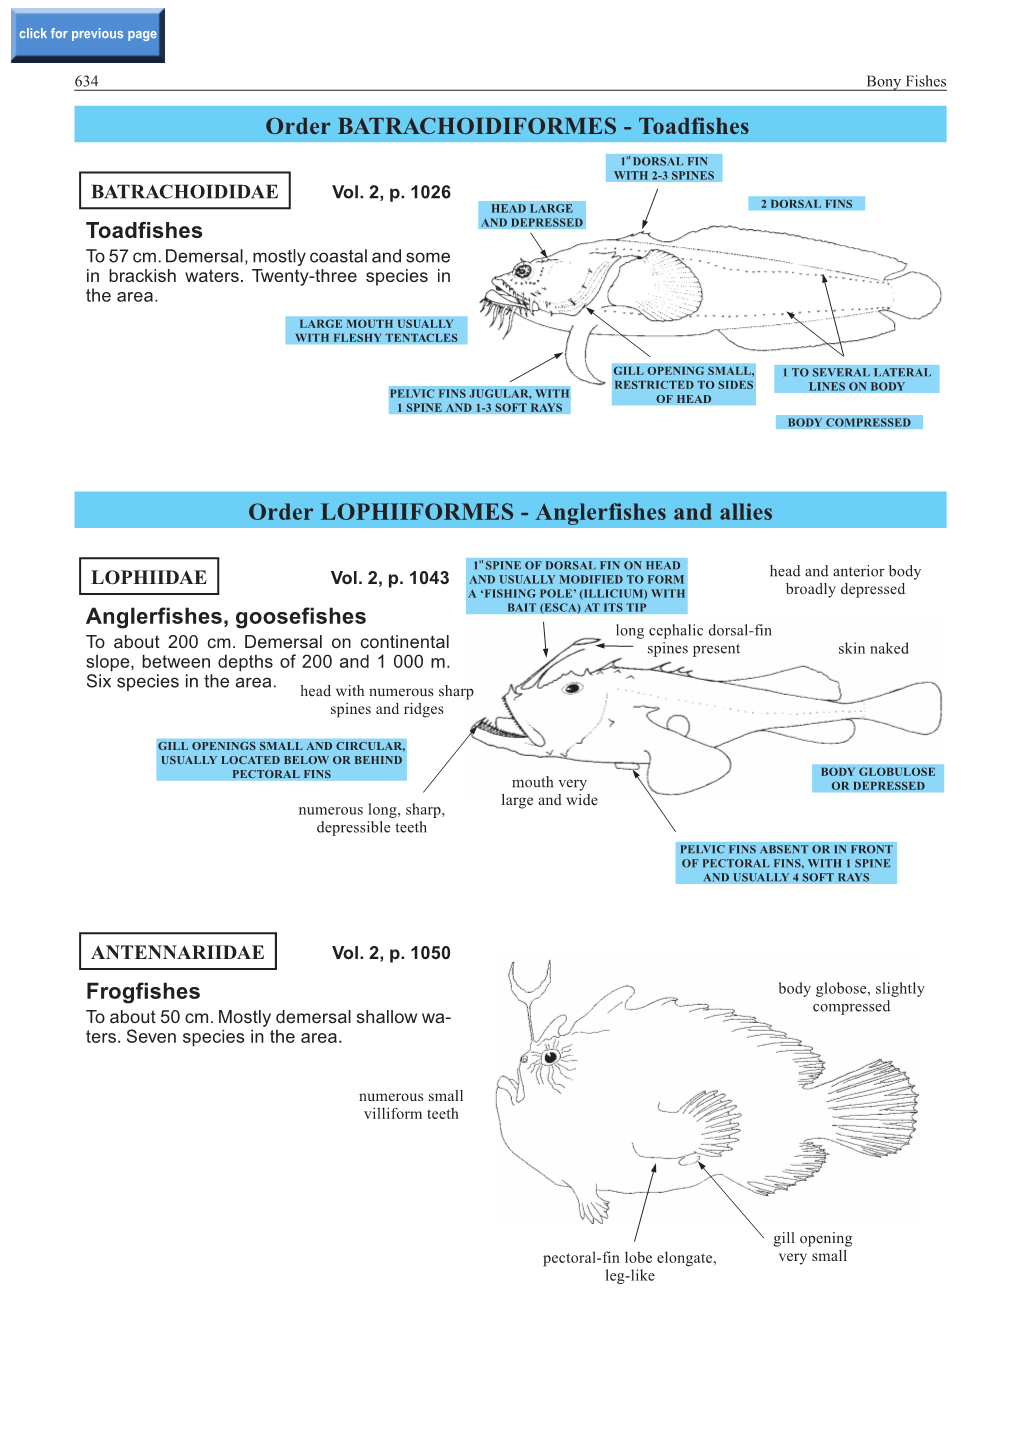 Order BATRACHOIDIFORMES - Toadfishes